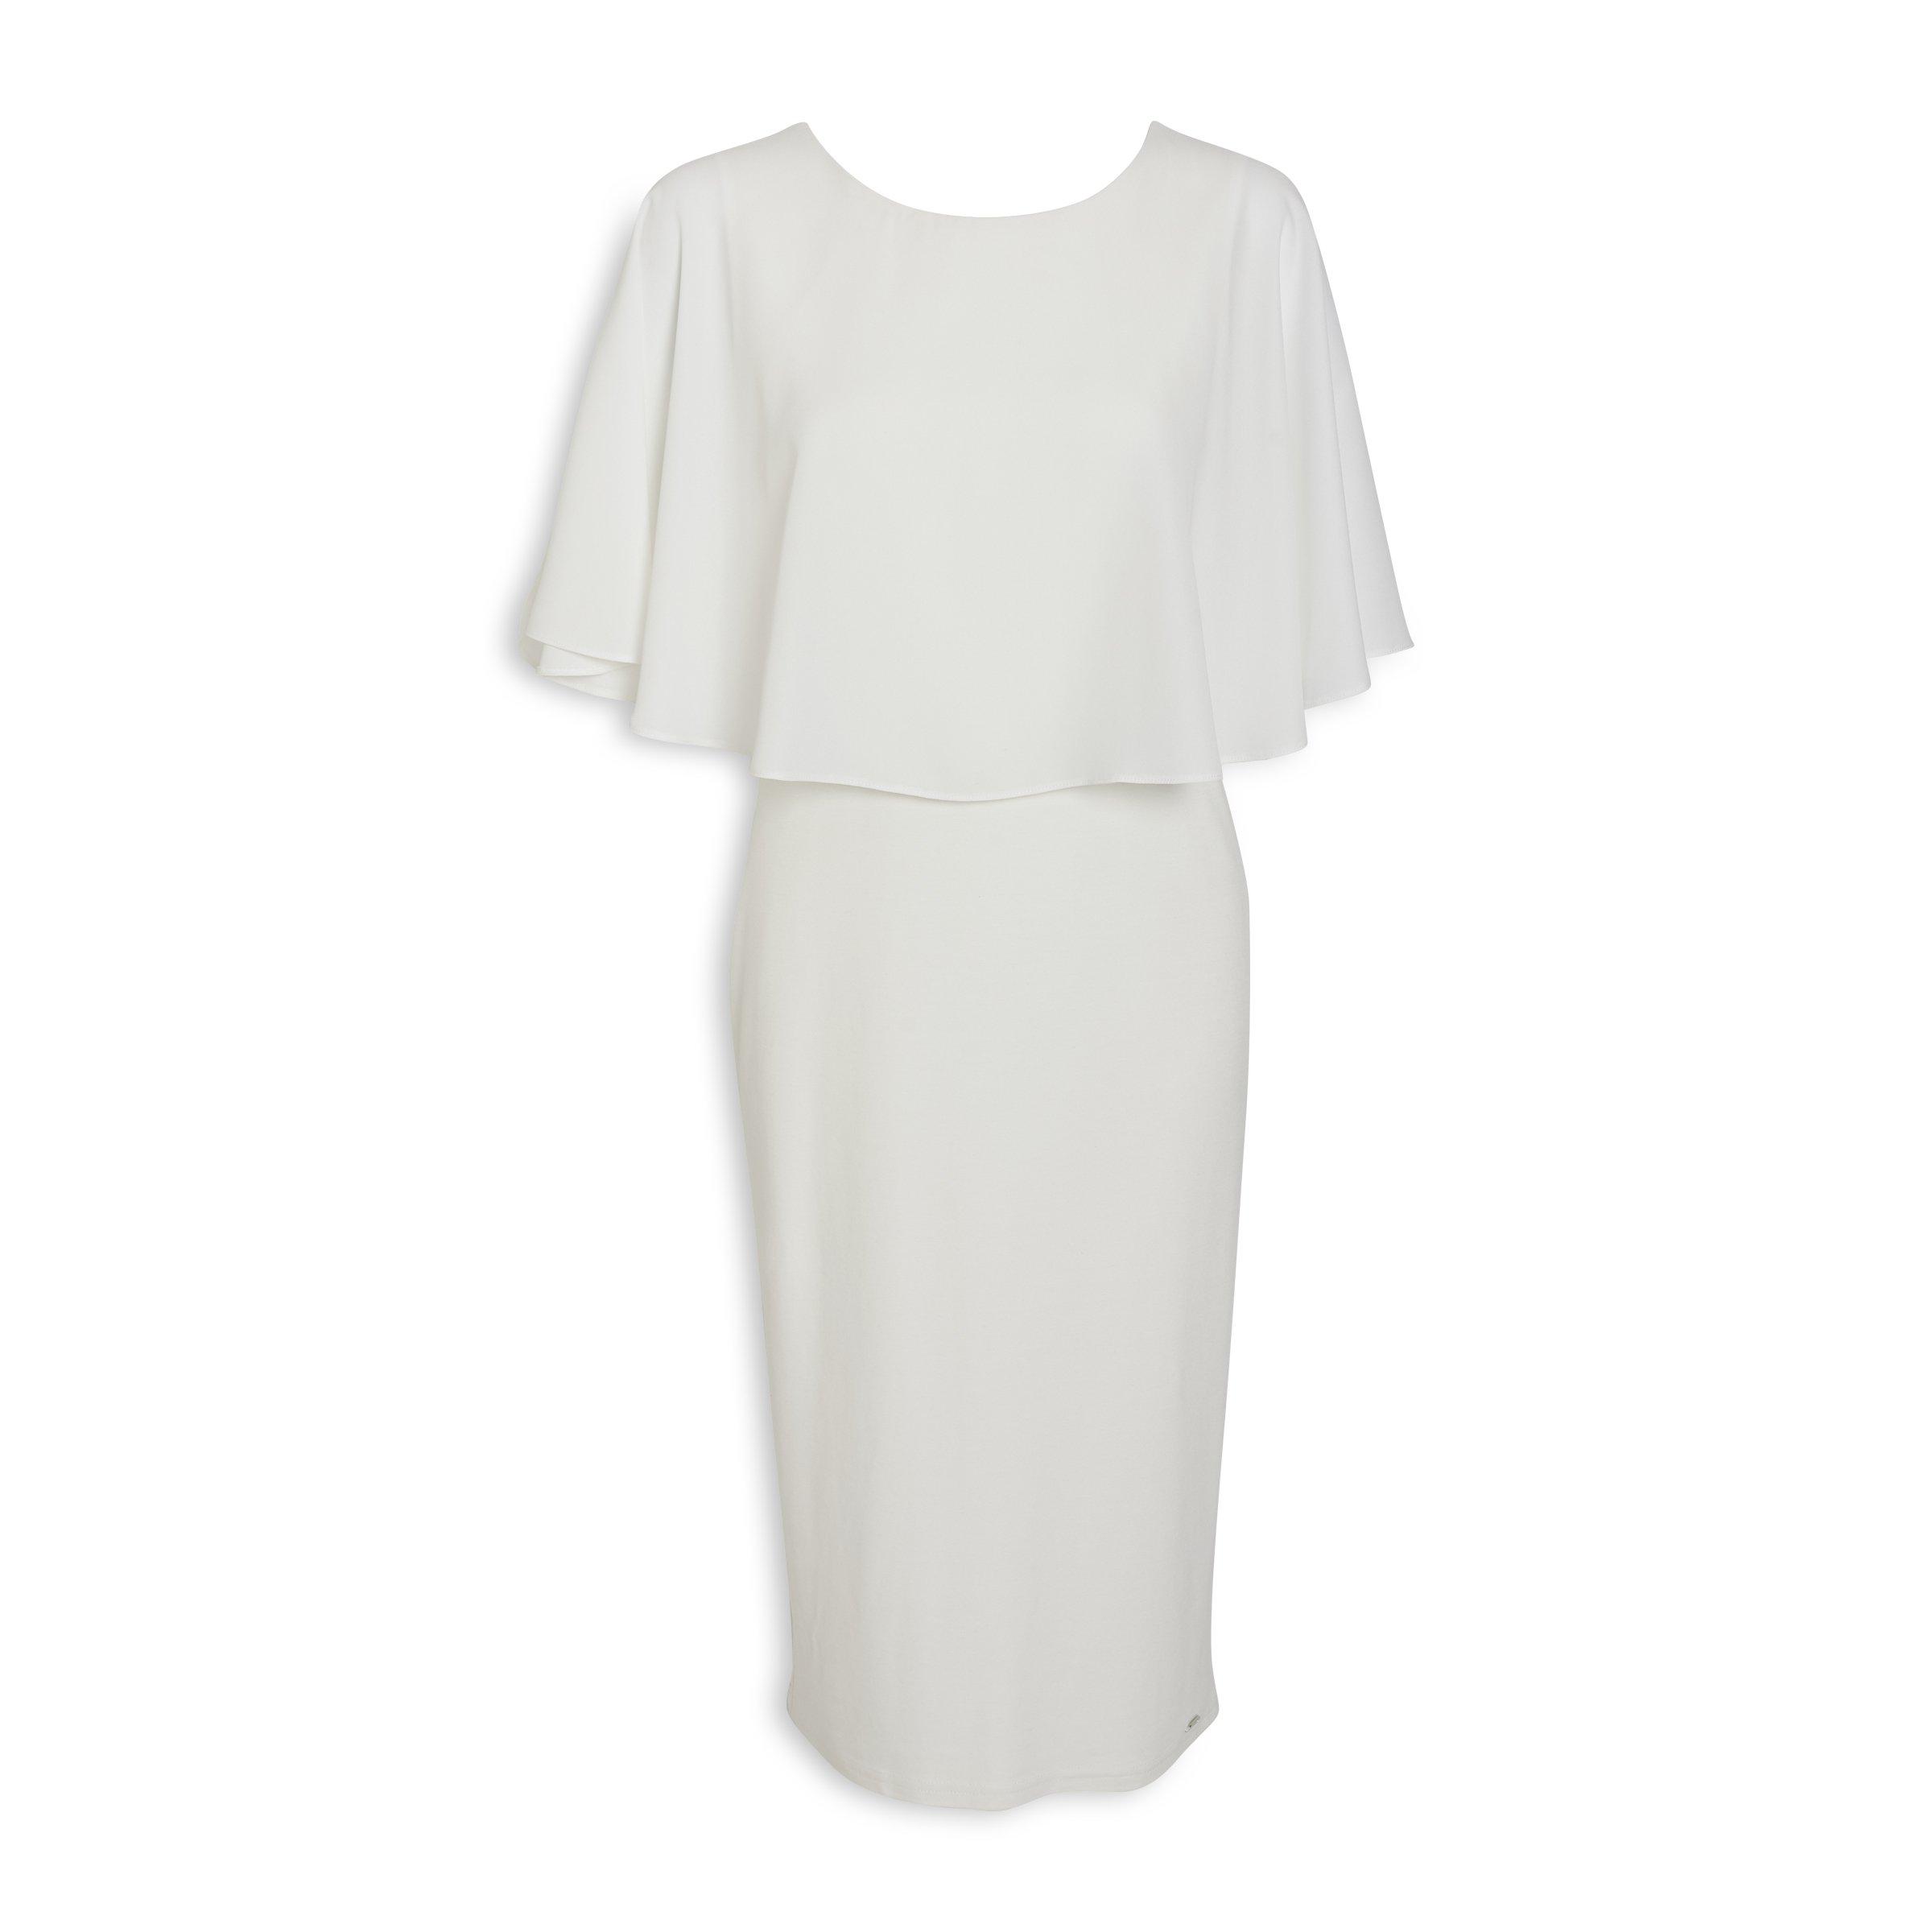 Truworths White Dresses Sale Online, 50 ...